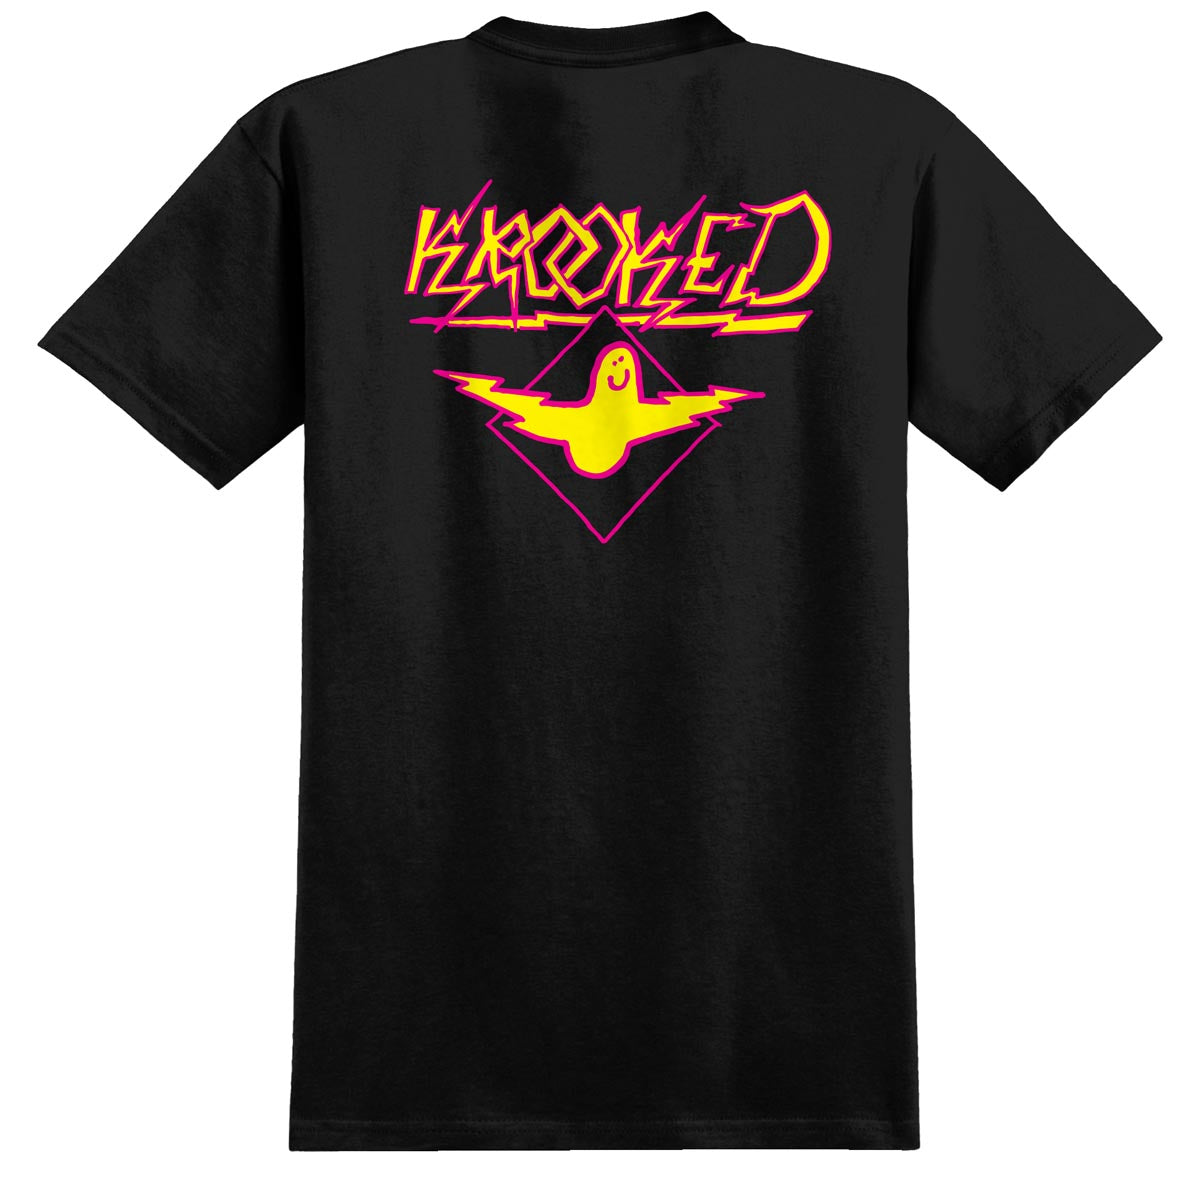 Krooked Bird Lightening T-Shirt - Black/Magenta/Yellow image 1